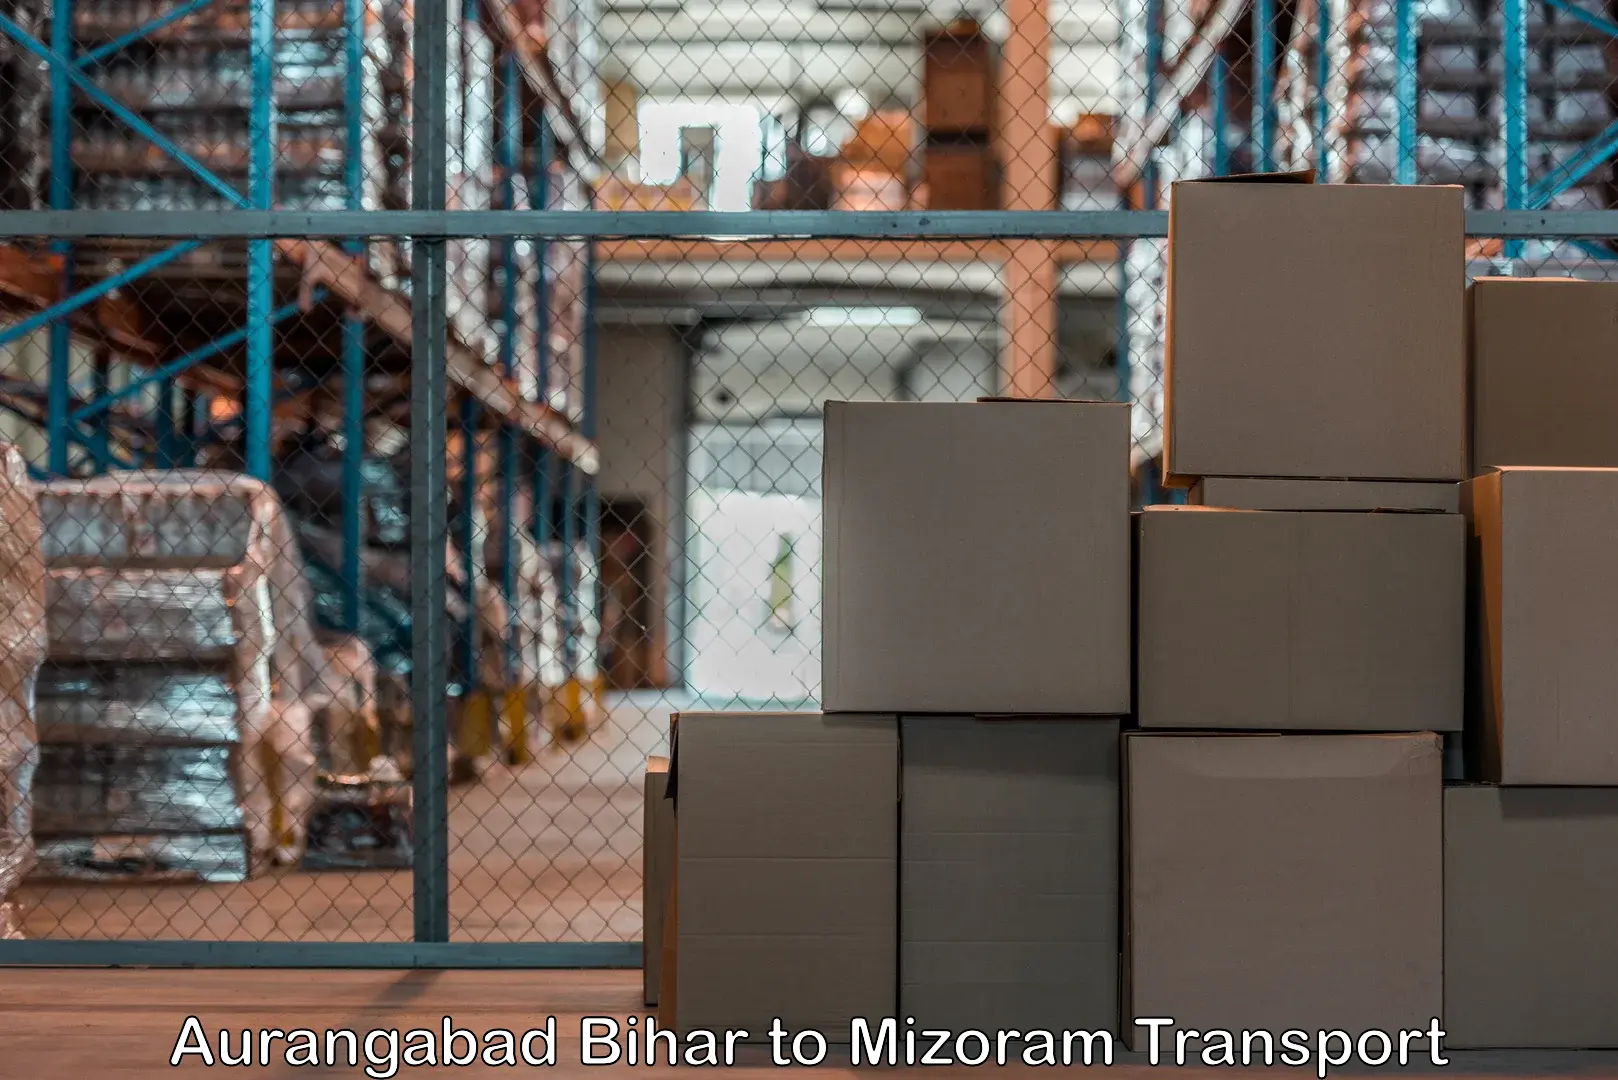 Delivery service Aurangabad Bihar to Siaha